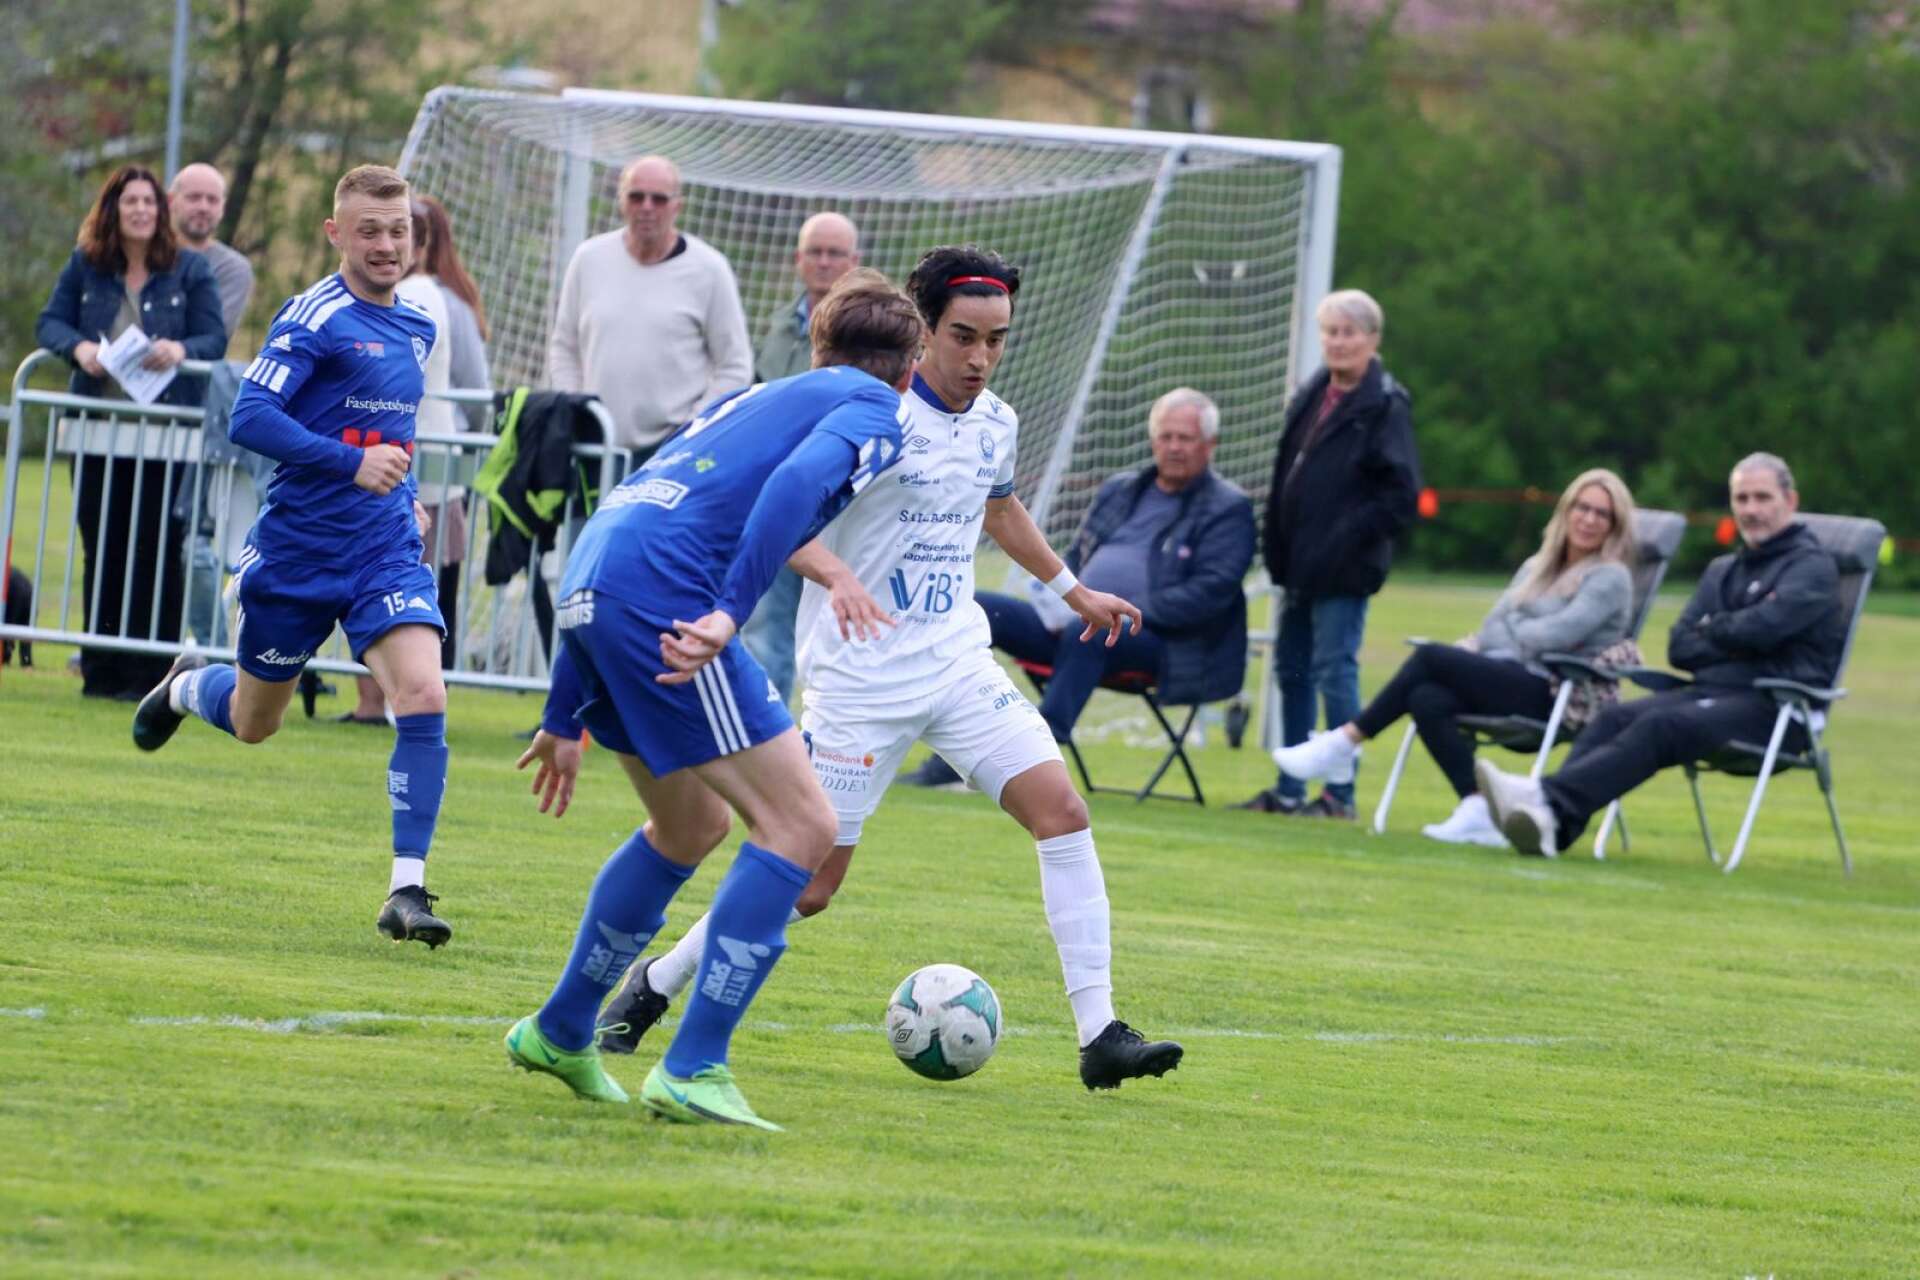 Jalal Jamz under 5–2-segern mot IFK Kristinehamn 19 maj. Jamz gjorde tre av sina elva mål i den matchen. 